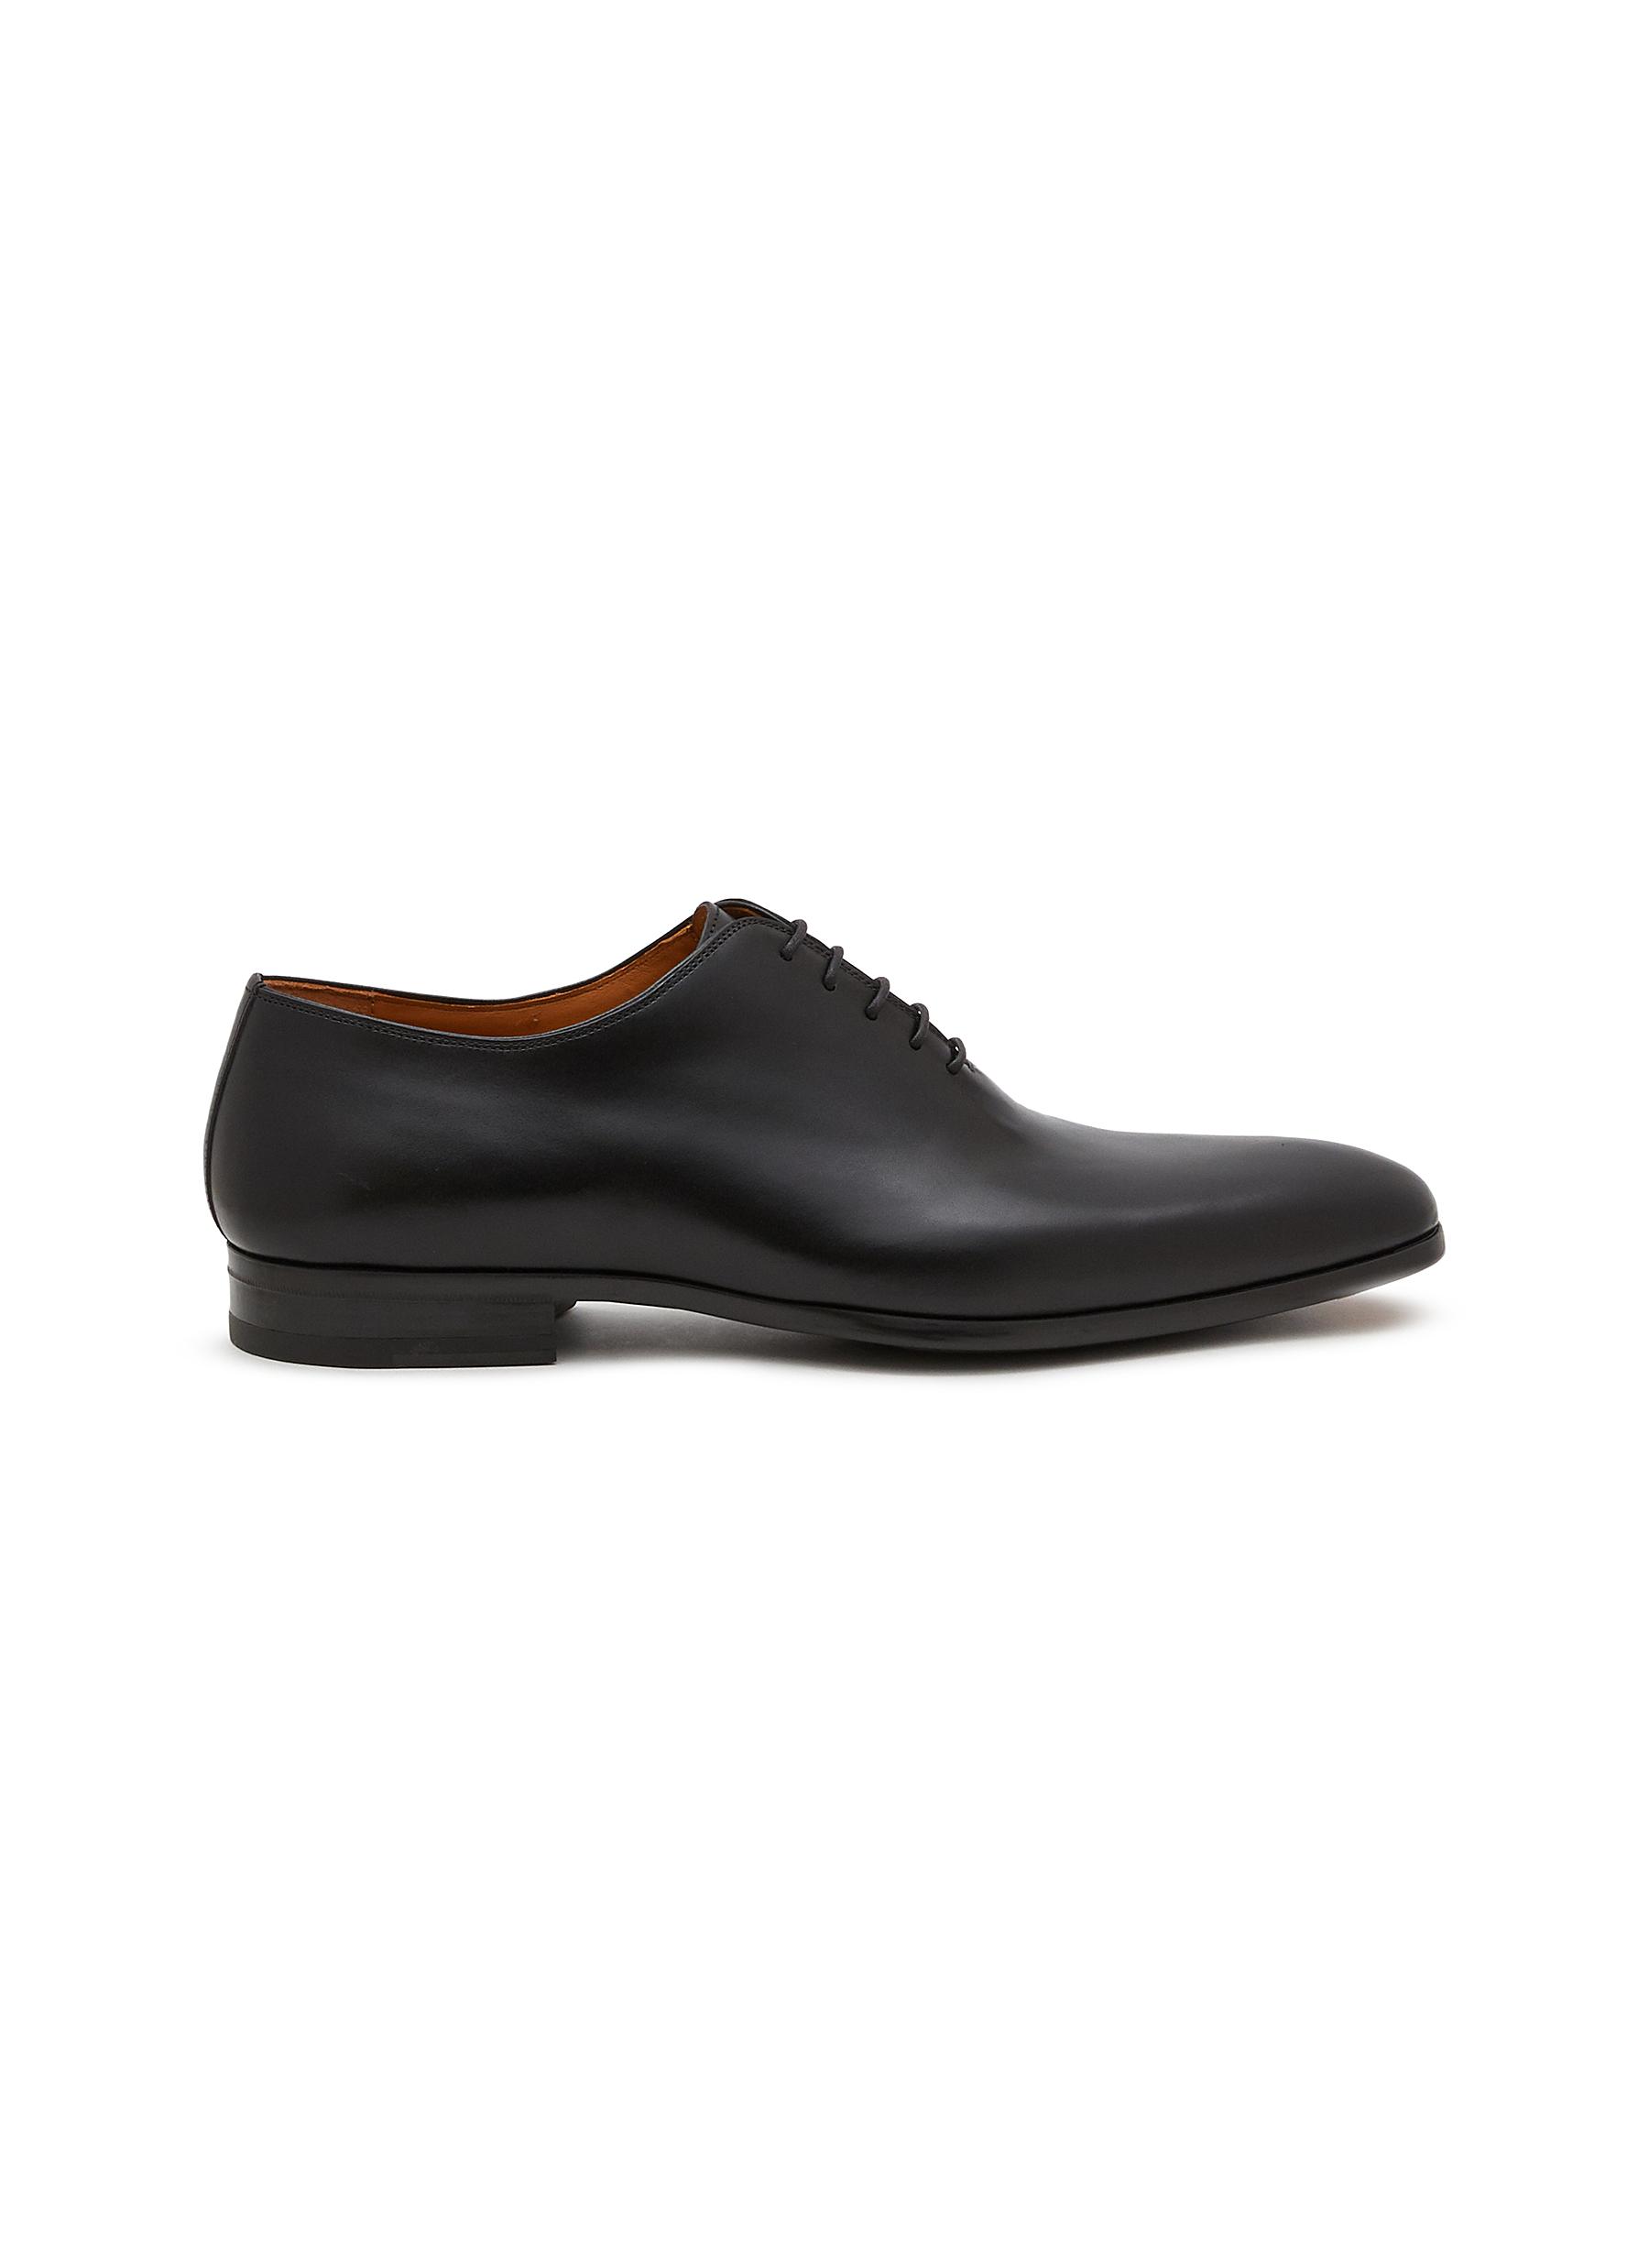 MAGNANNI ‘Austin' Whole Cut 6-Eyelet Leather Oxford Shoes